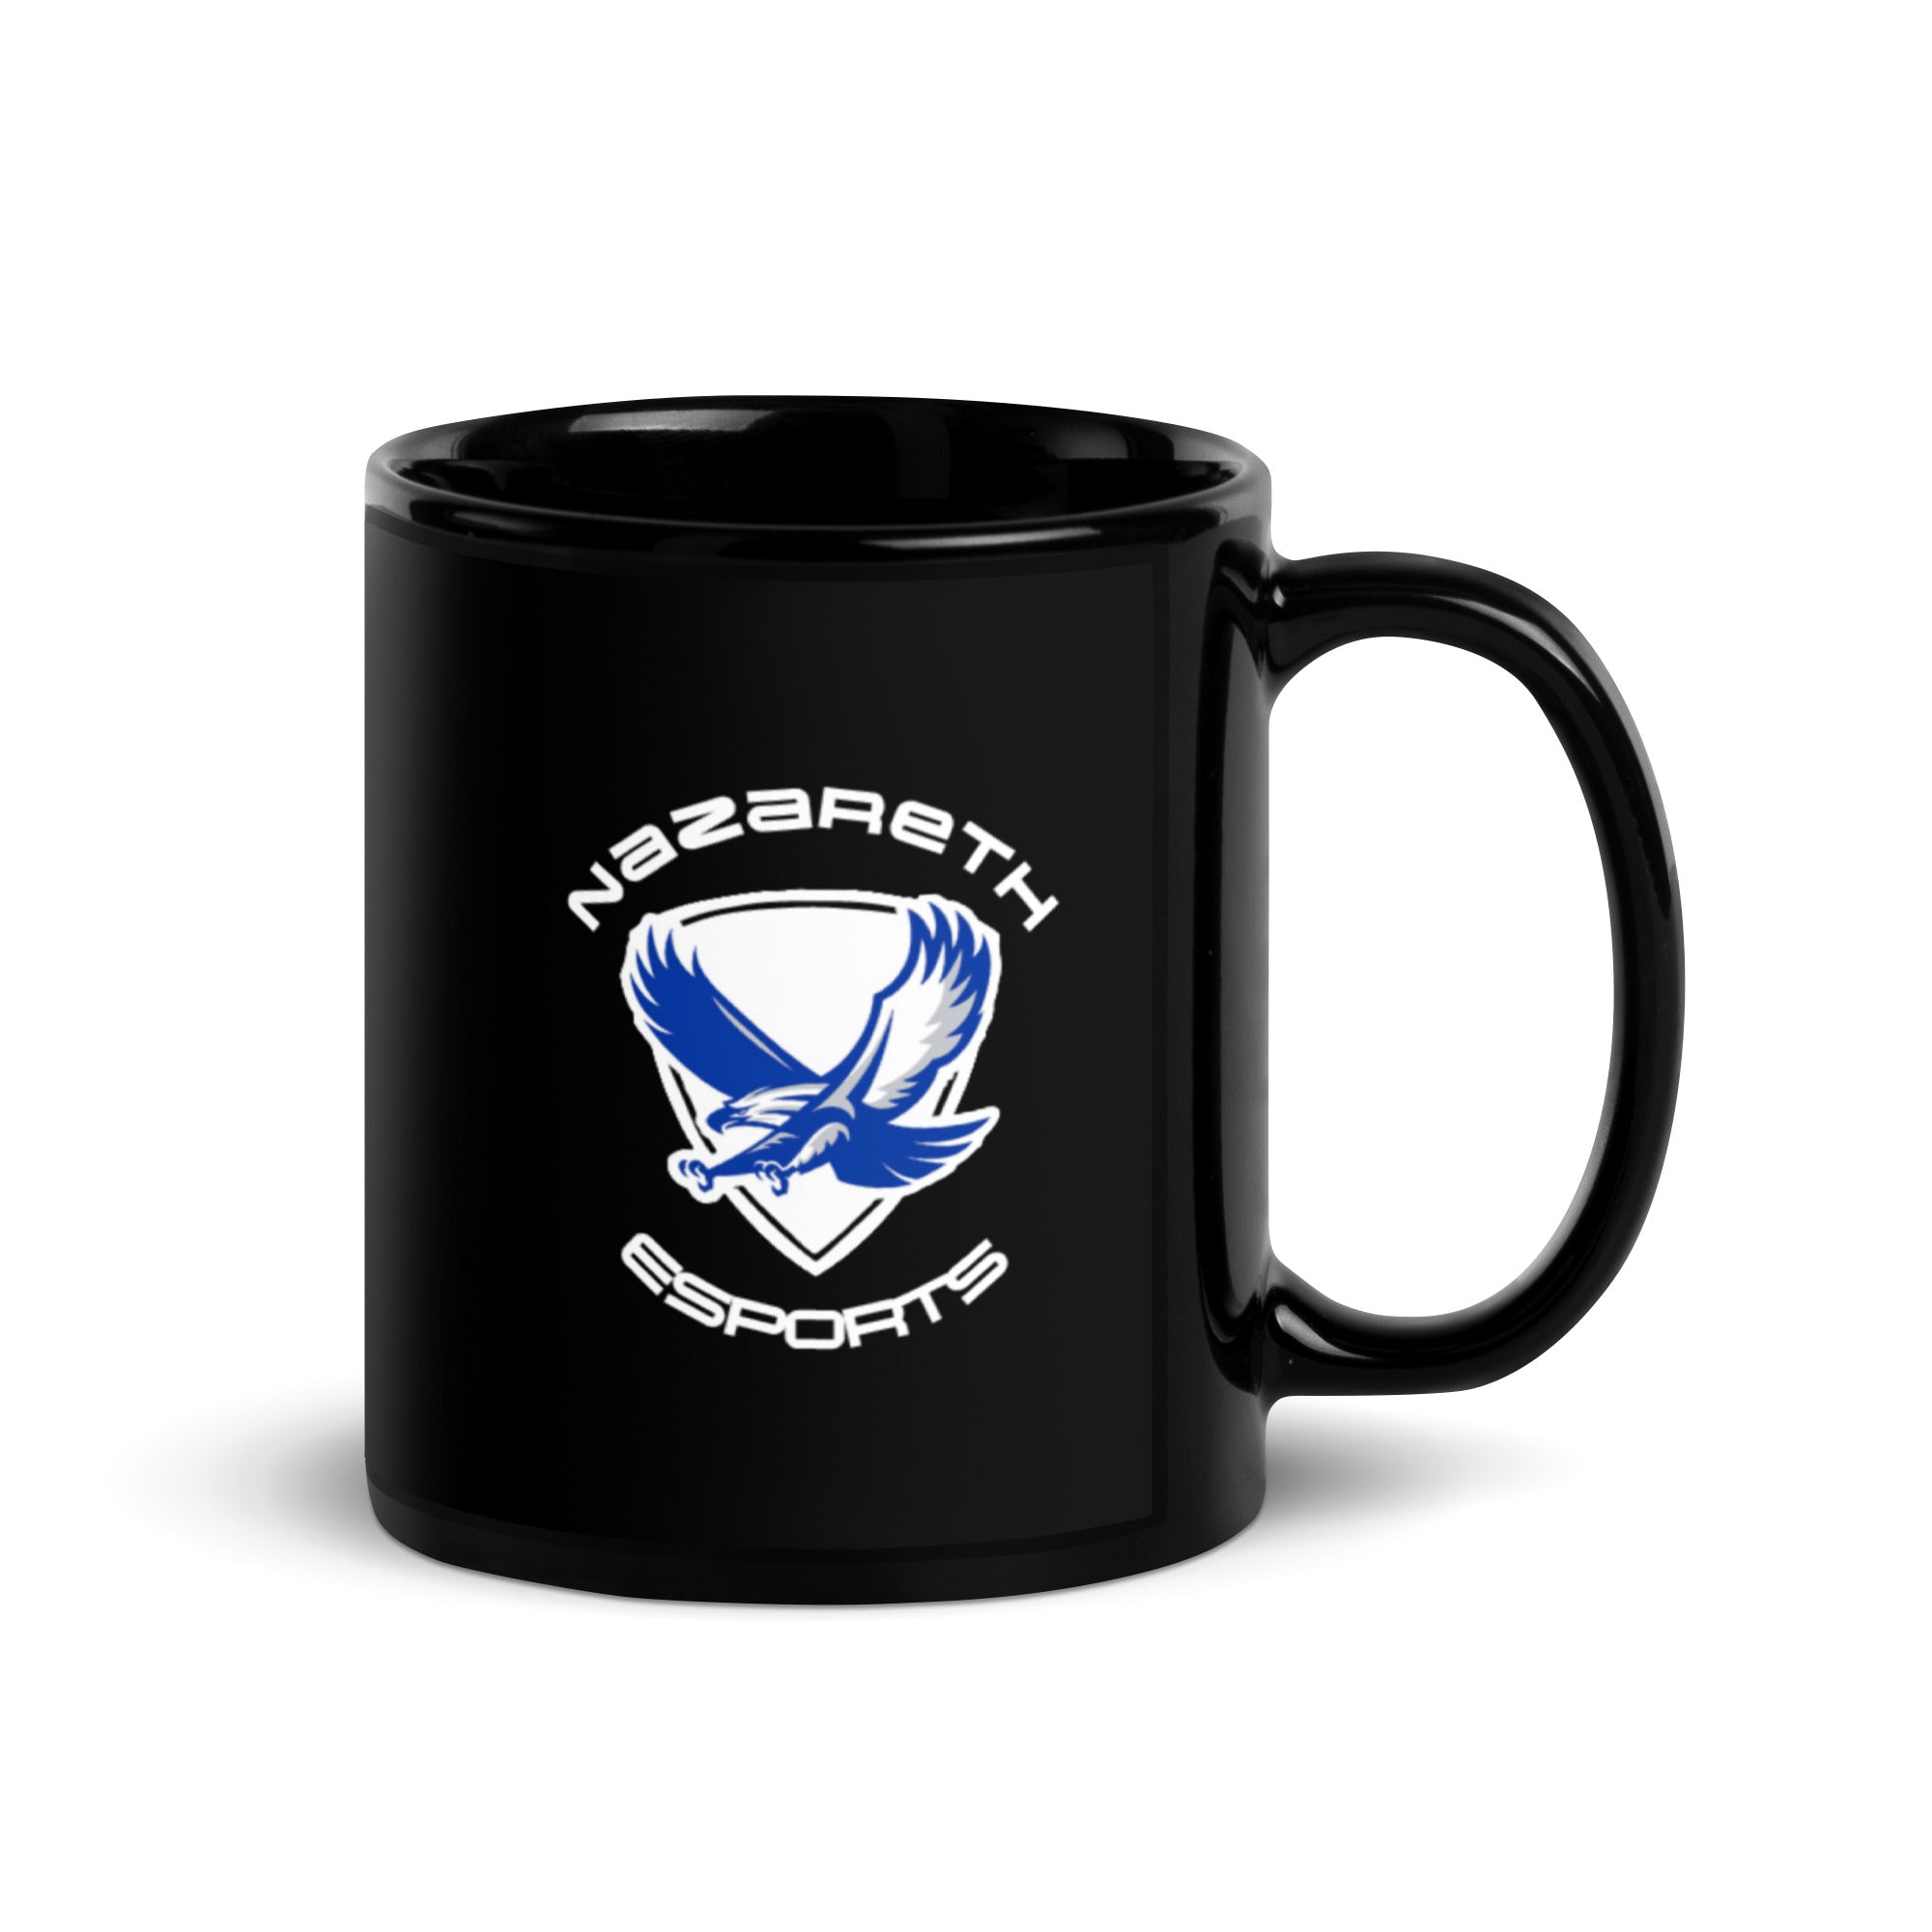 NAHS Esports Coffee Mug